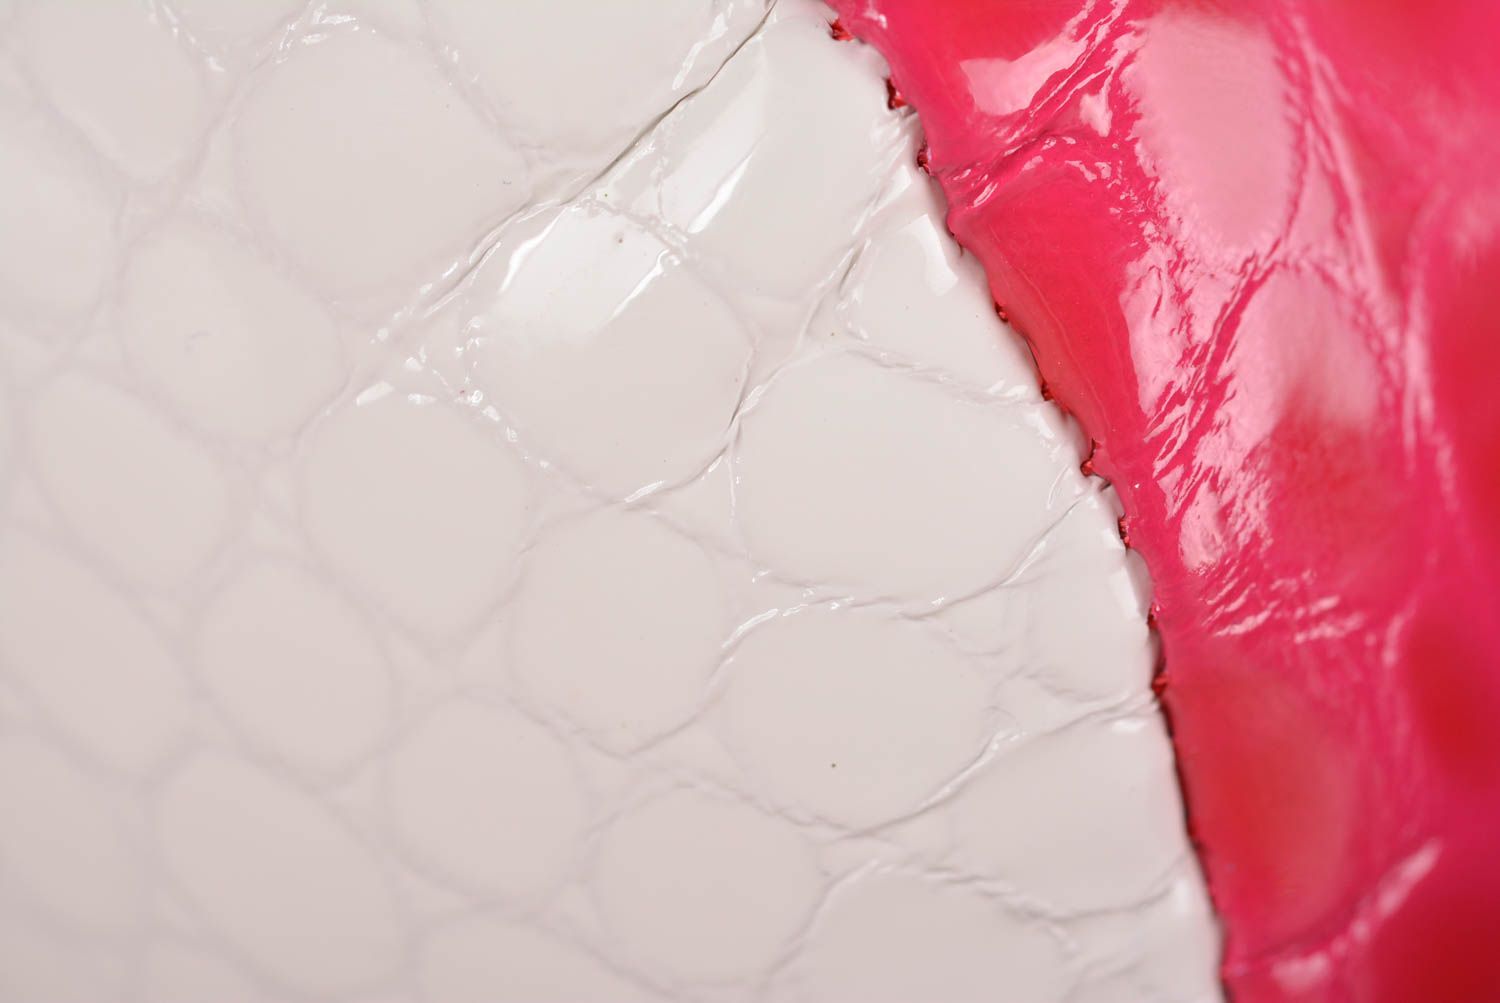 Handmade designer leather toy unusual pink interior element decor ideas photo 5